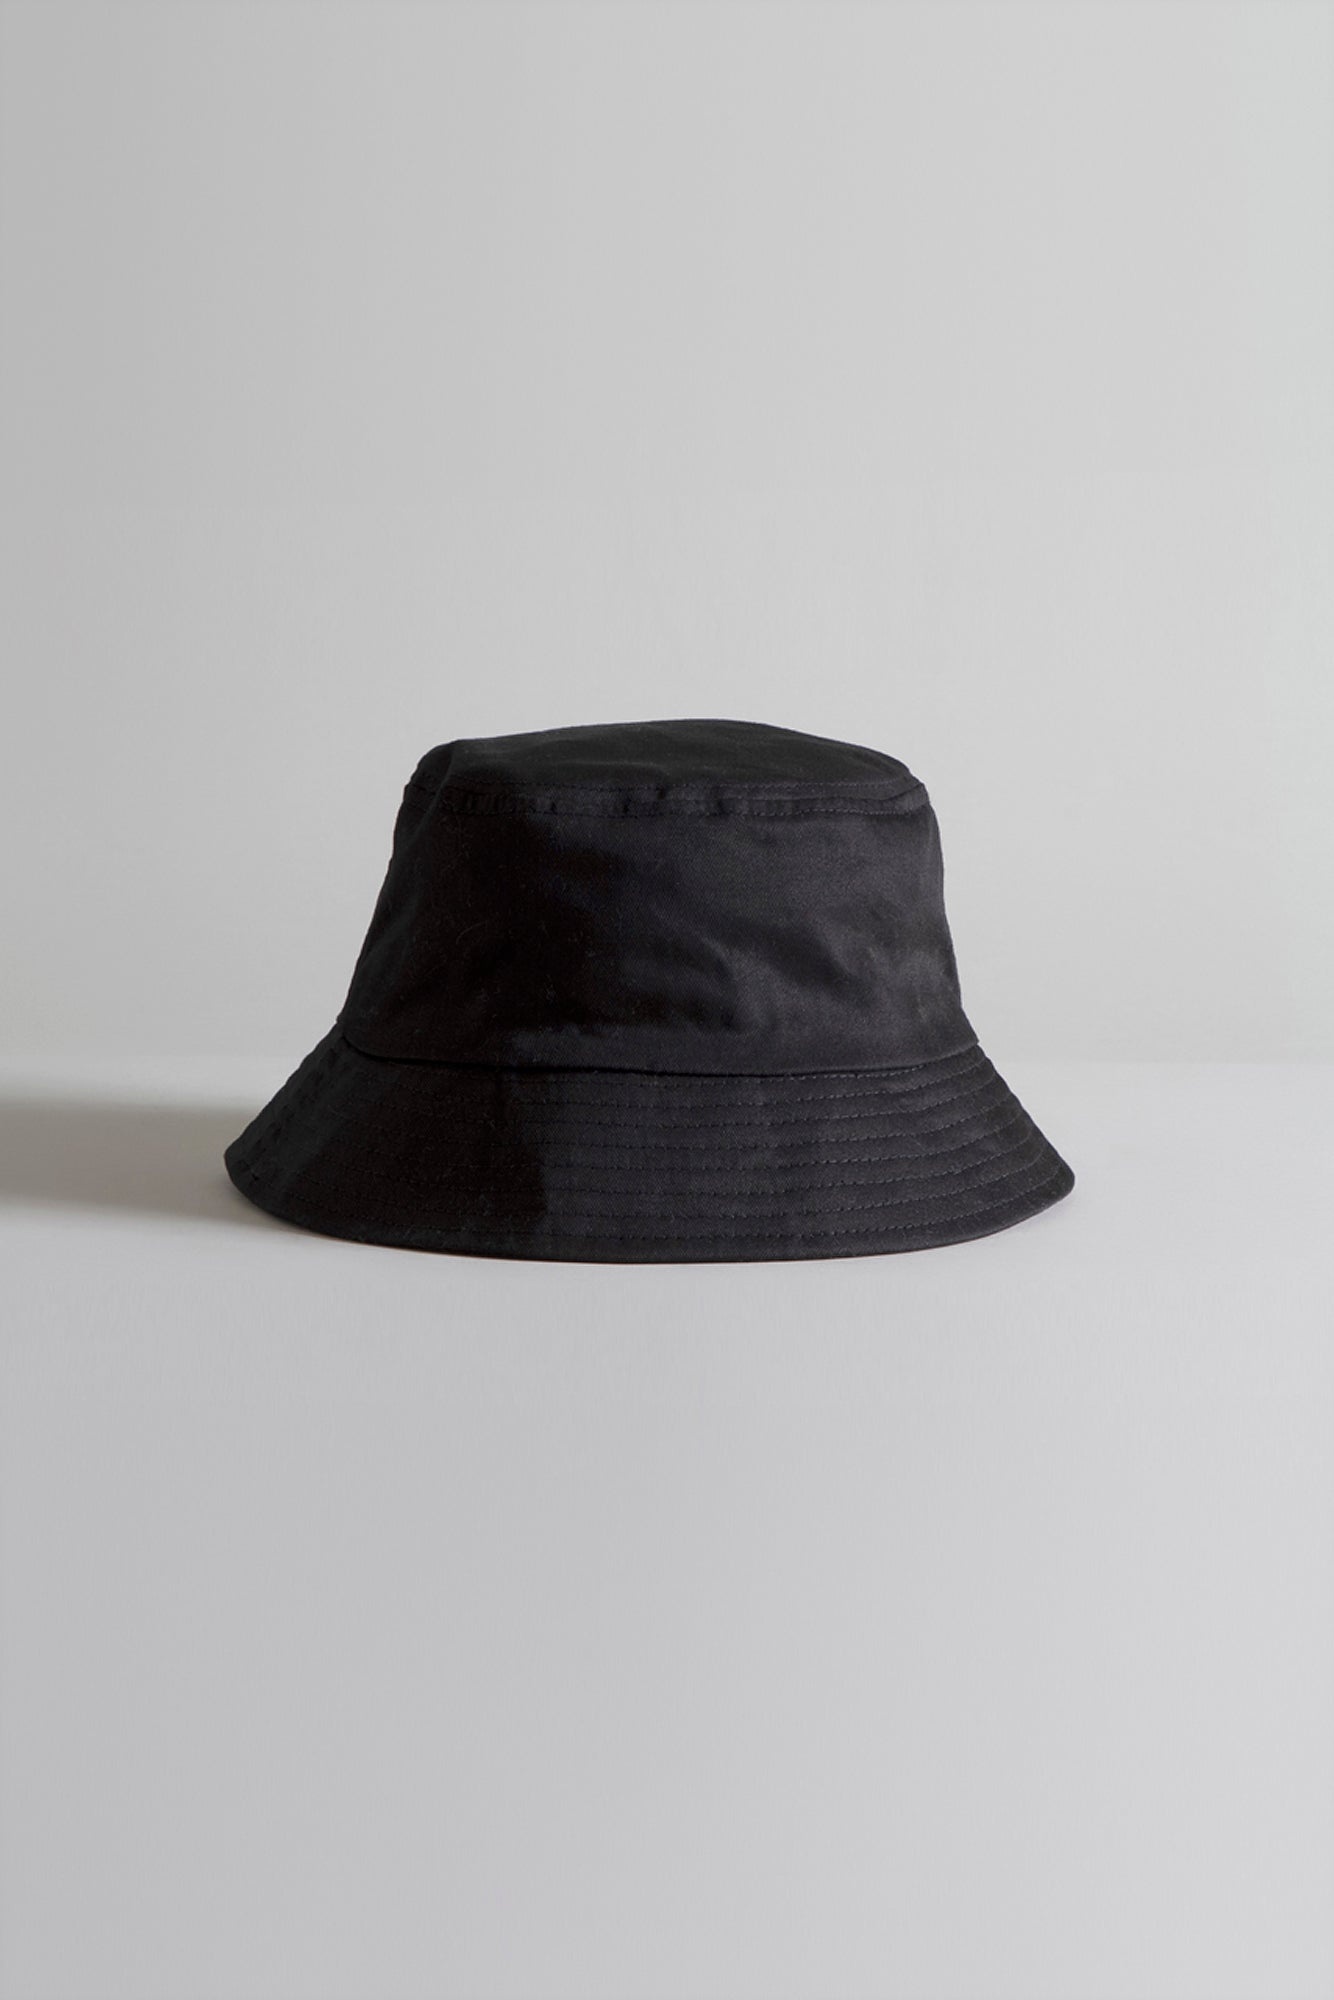 R13 BUCKET HAT | R13 Denim Official Site - 3